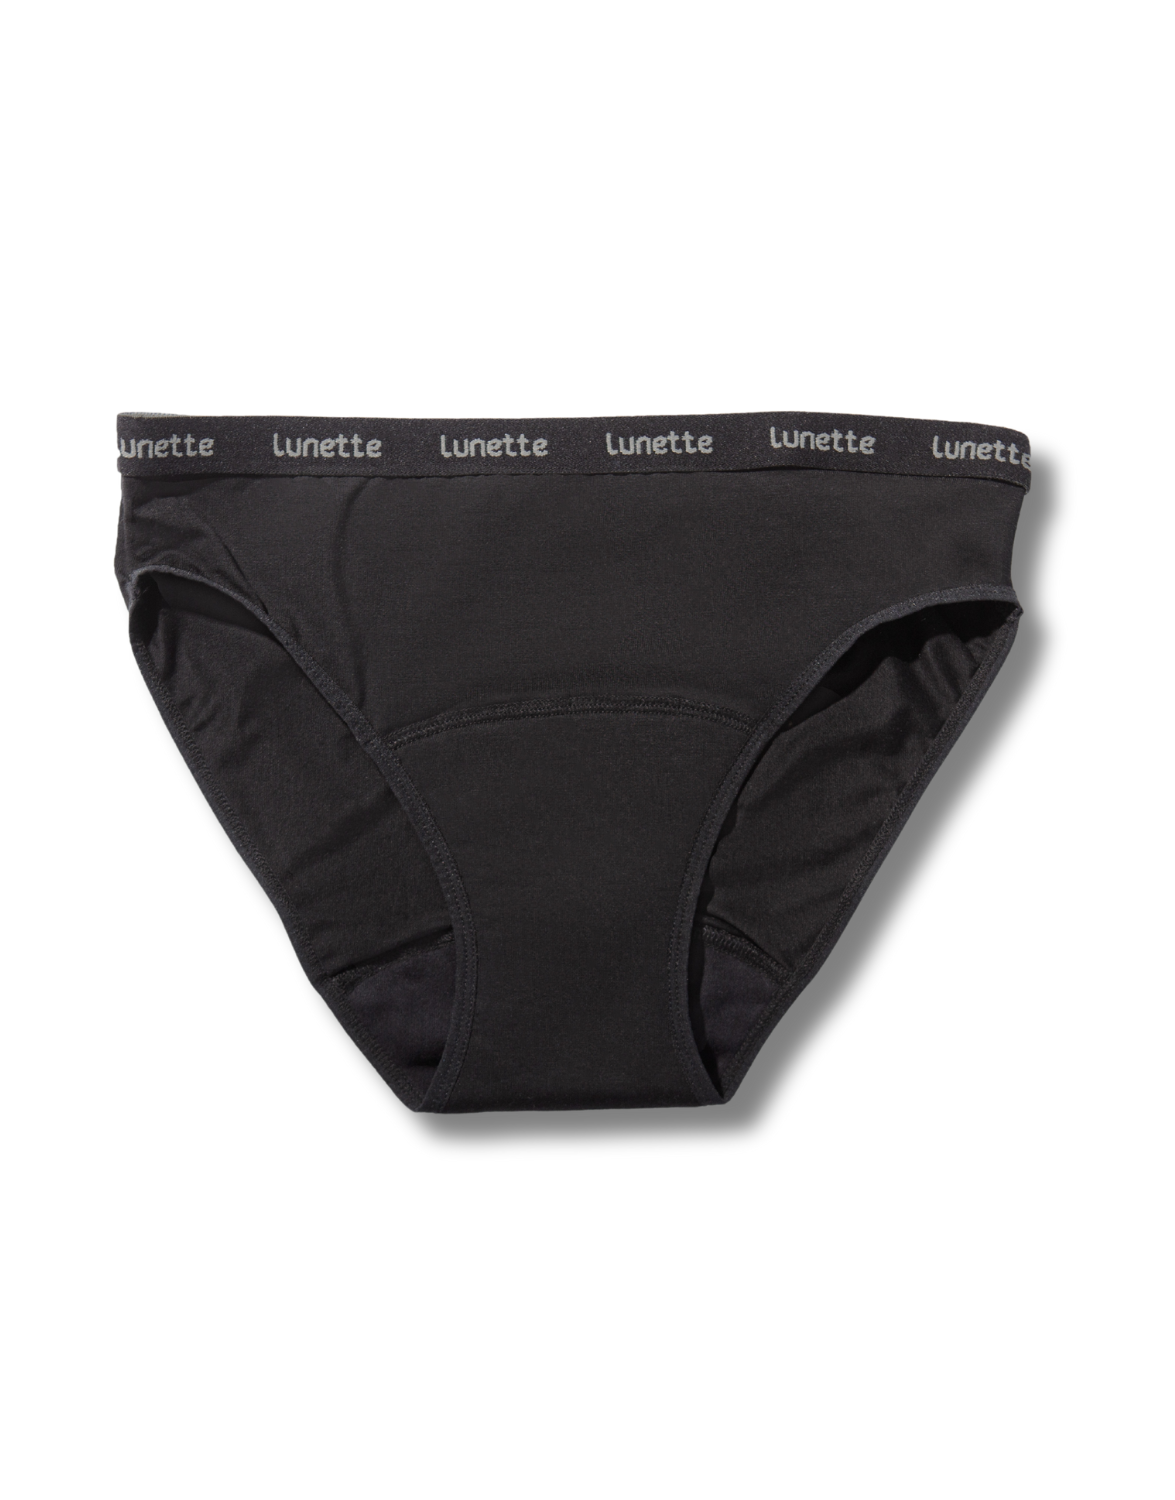 ZeroWaste-Global - Disposable Underwear Women & Men plastic free